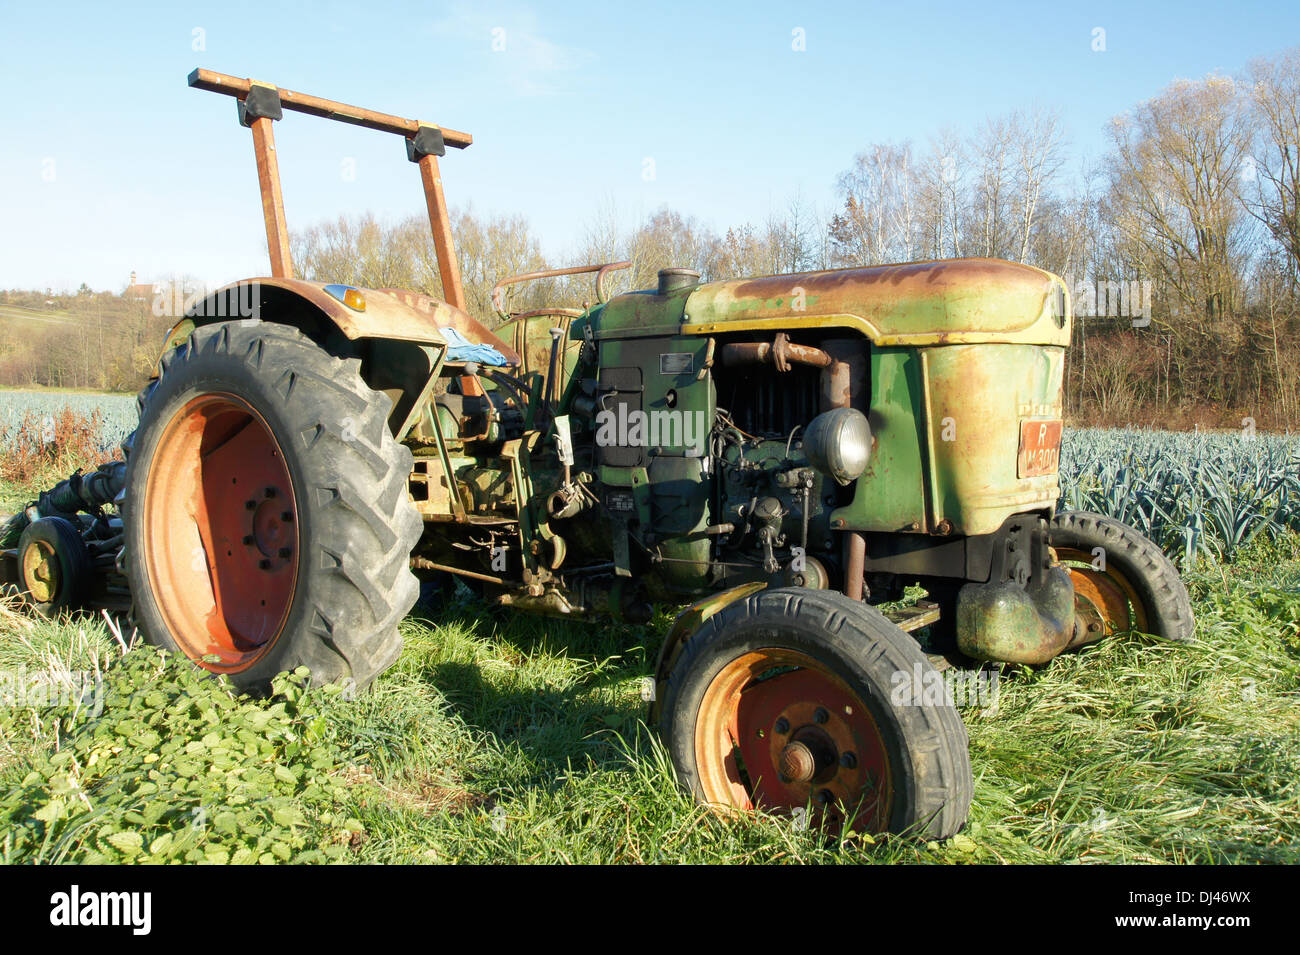 Deutz tractors hi-res stock photography and images - Alamy